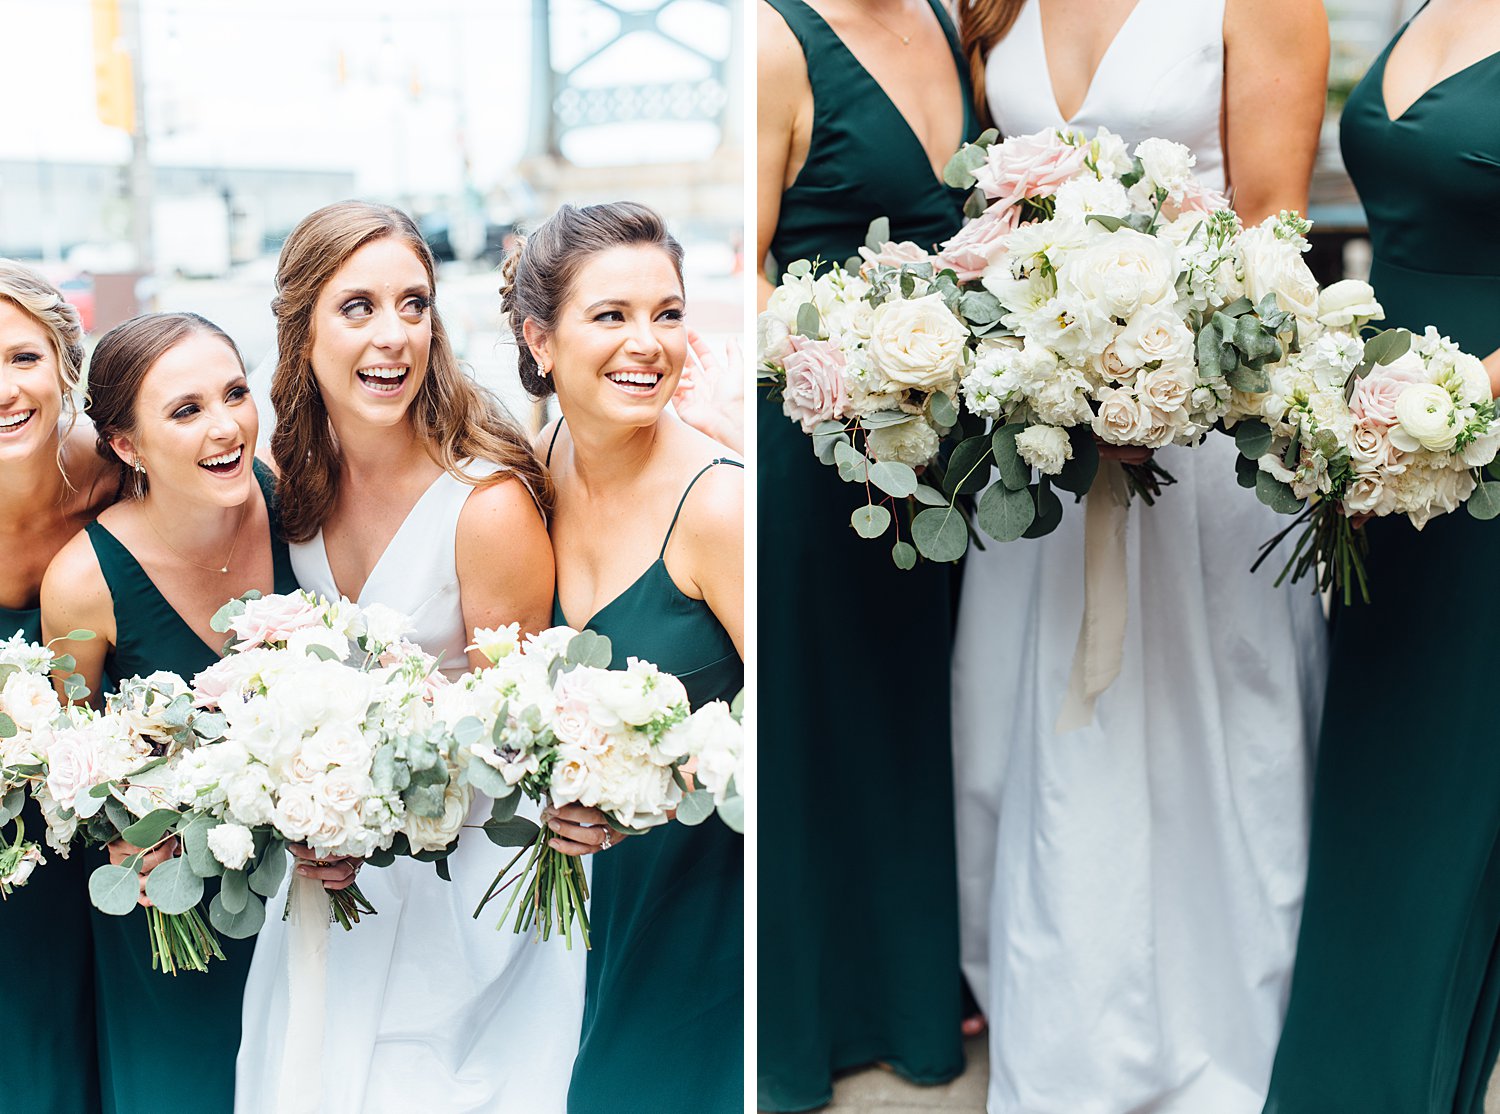 Jen + Tyler - Race Street Pier La Peg Wedding - Philadelphia Wedding Photographer - Alison Dunn Photography photo